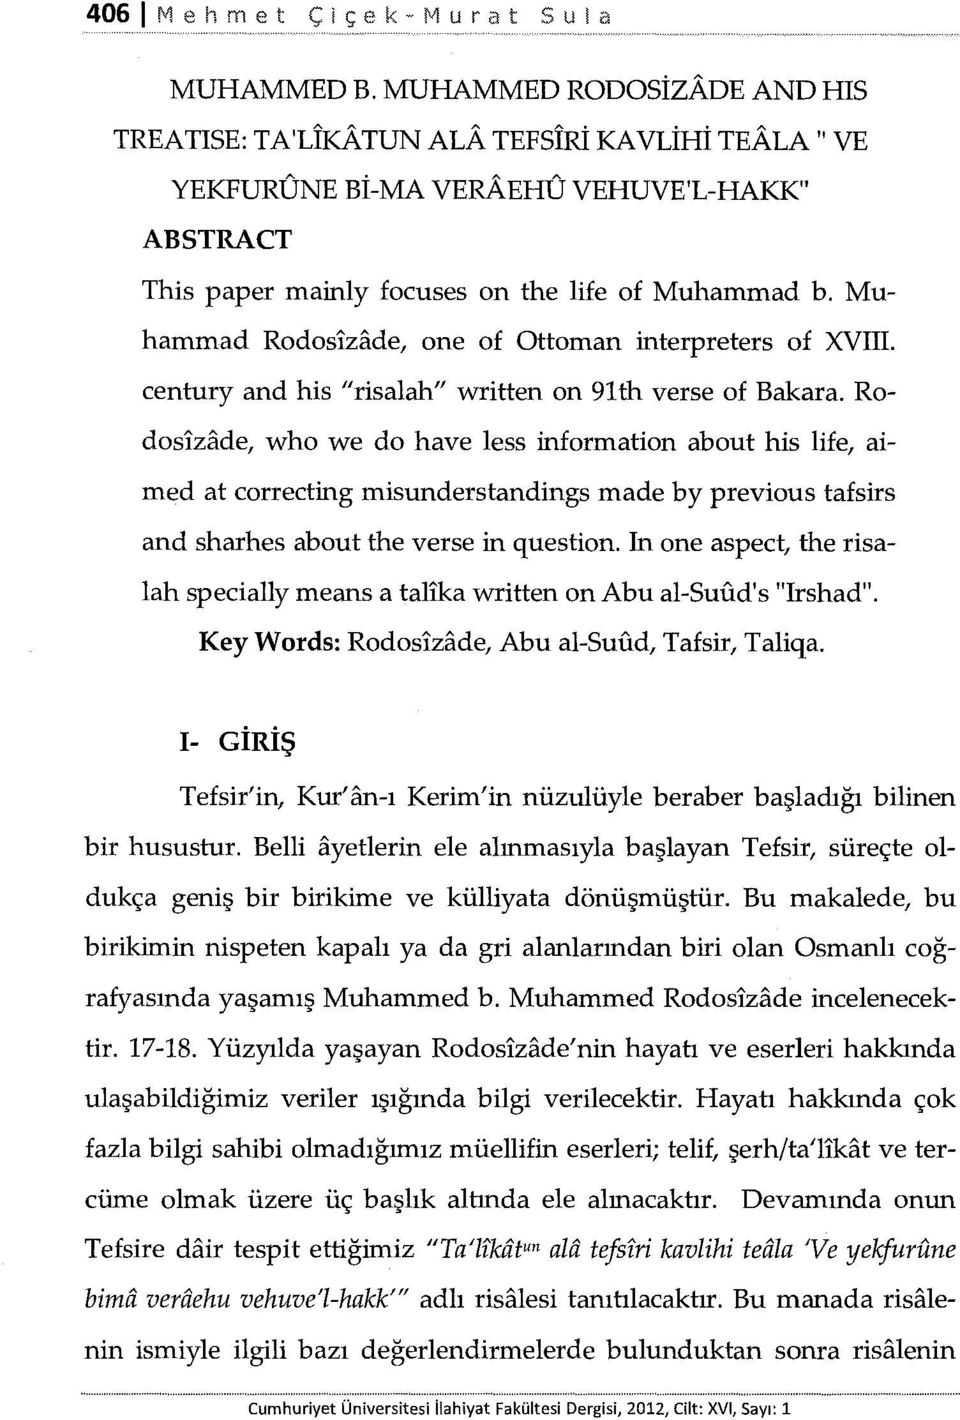 Muhammad Rodosizade, one of Ottoman interpreters of XVIII. century and his "risalah" written on 91th verse of Bakara.